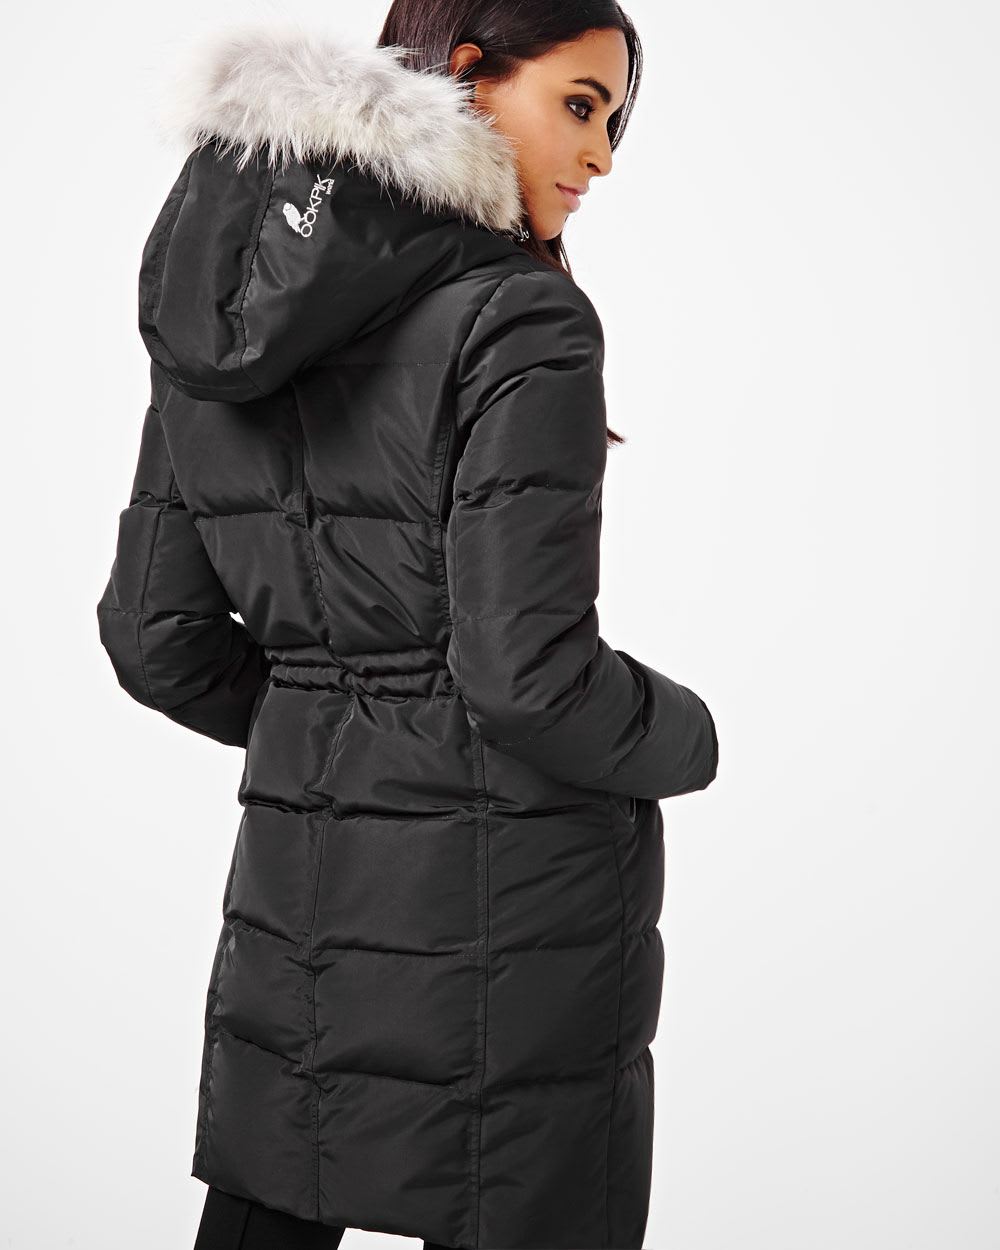 Adelyna fur trim coat by ookpik world (TM) | RW&CO.